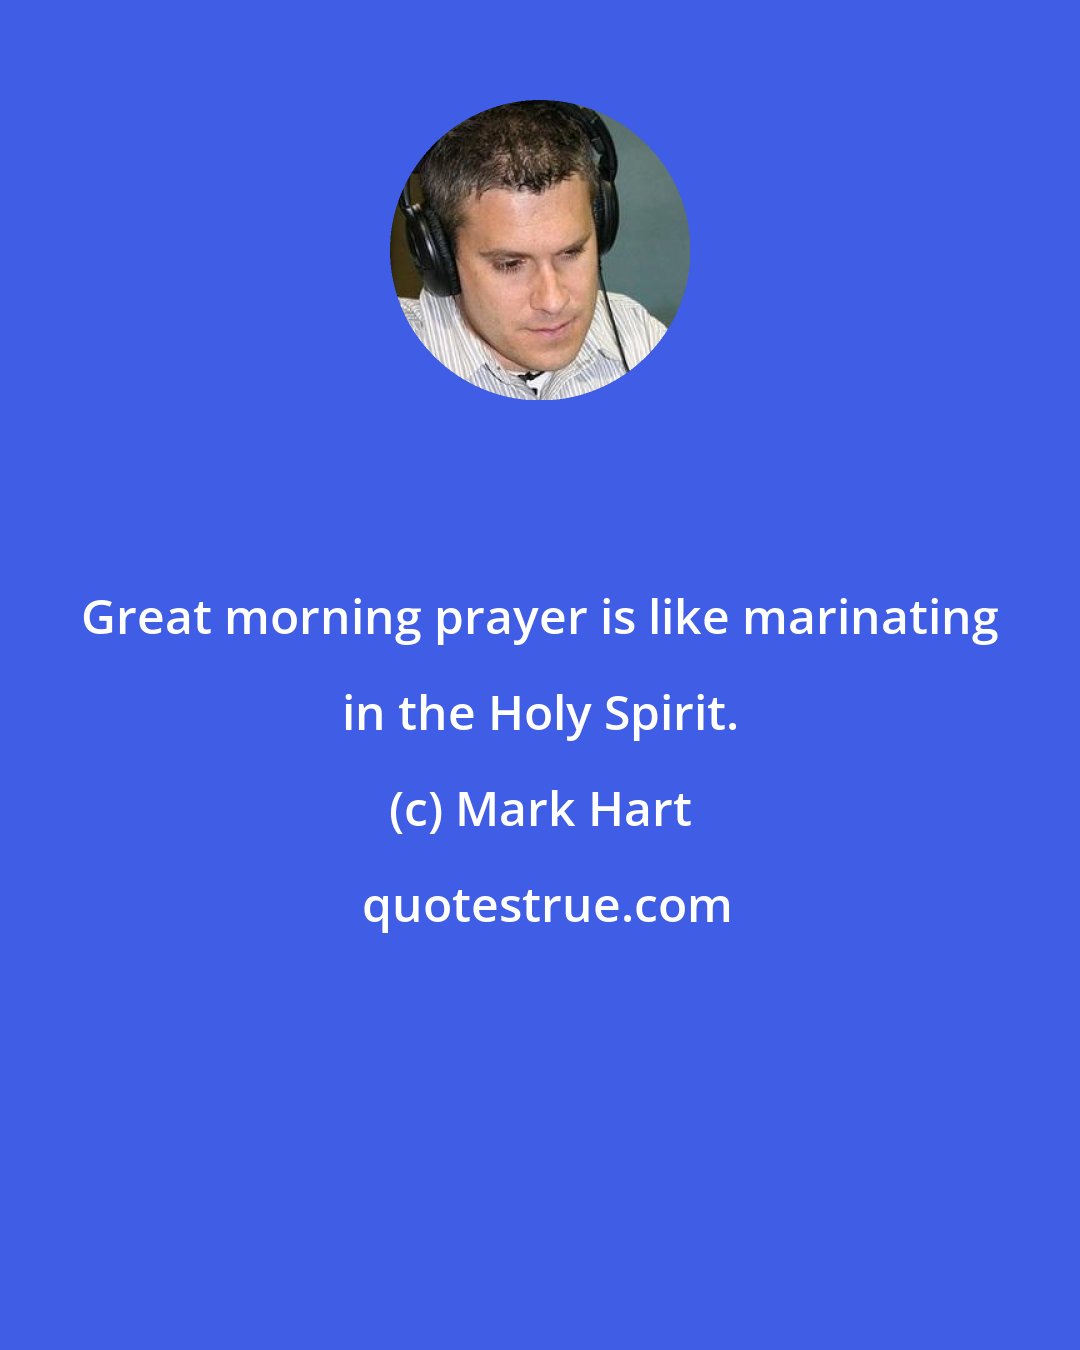 Mark Hart: Great morning prayer is like marinating in the Holy Spirit.